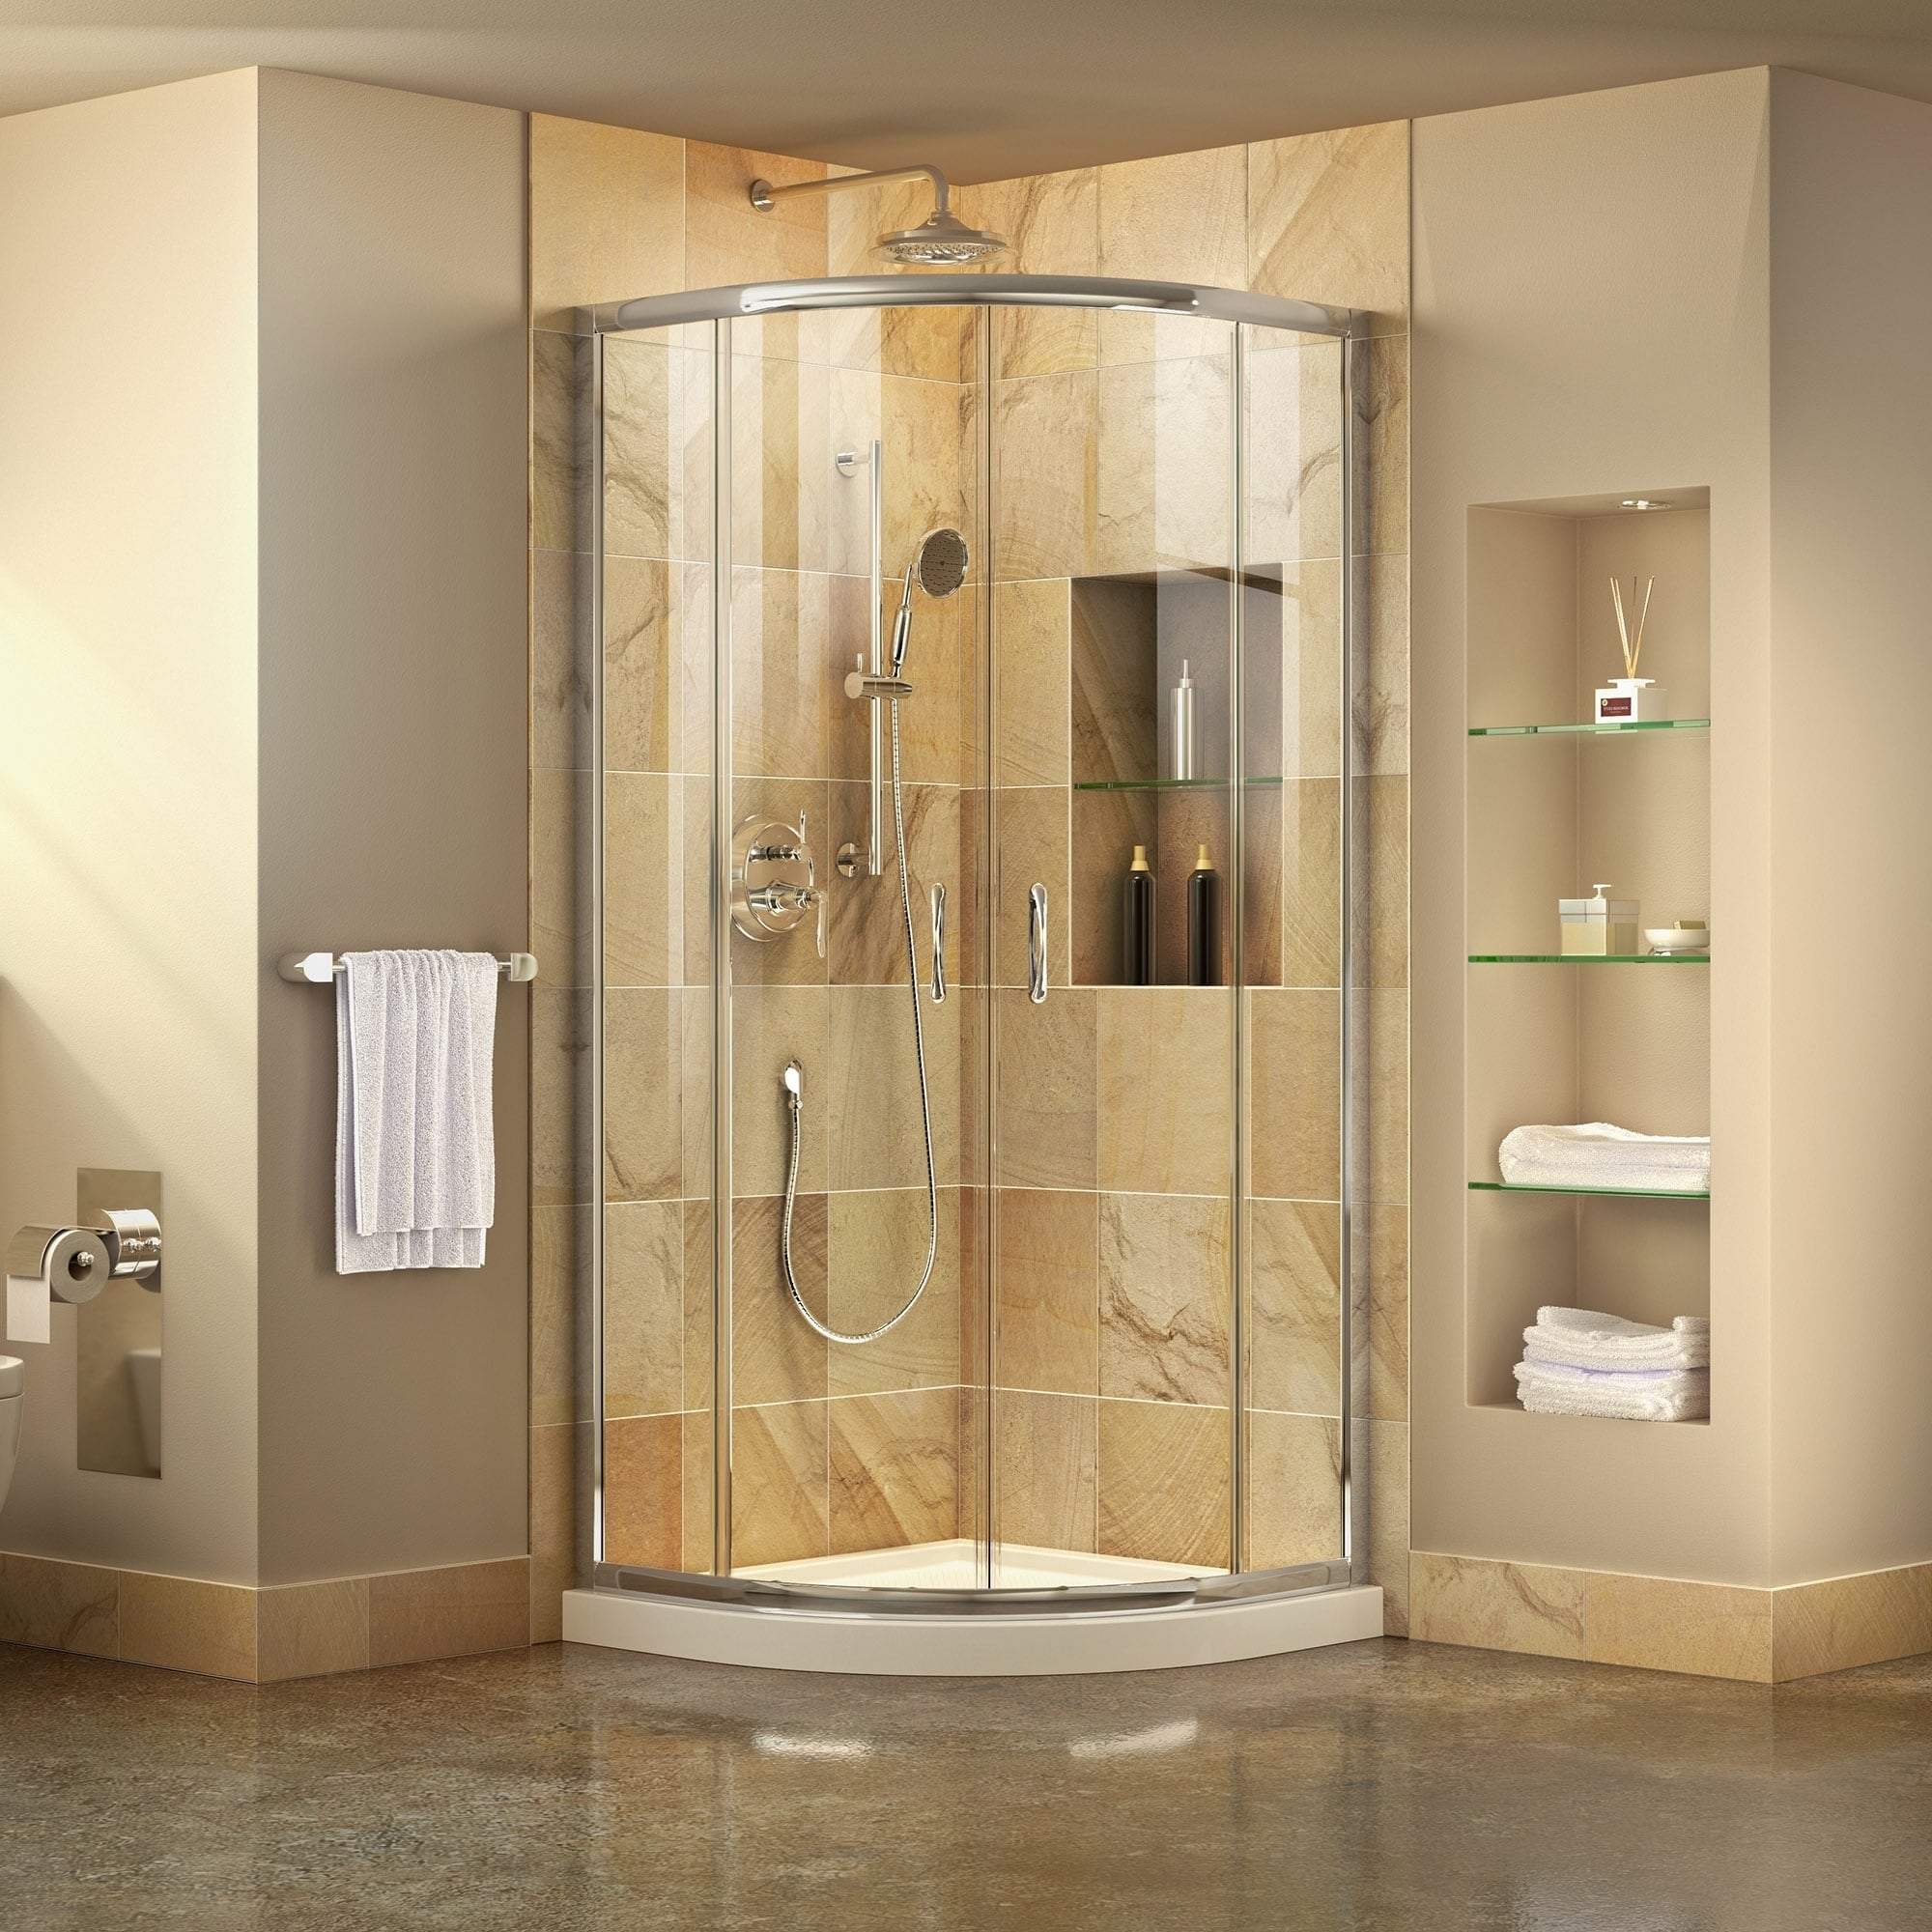 Dreamline Prime Sliding Shower Enclosure And 38x38 inch Shower Tray